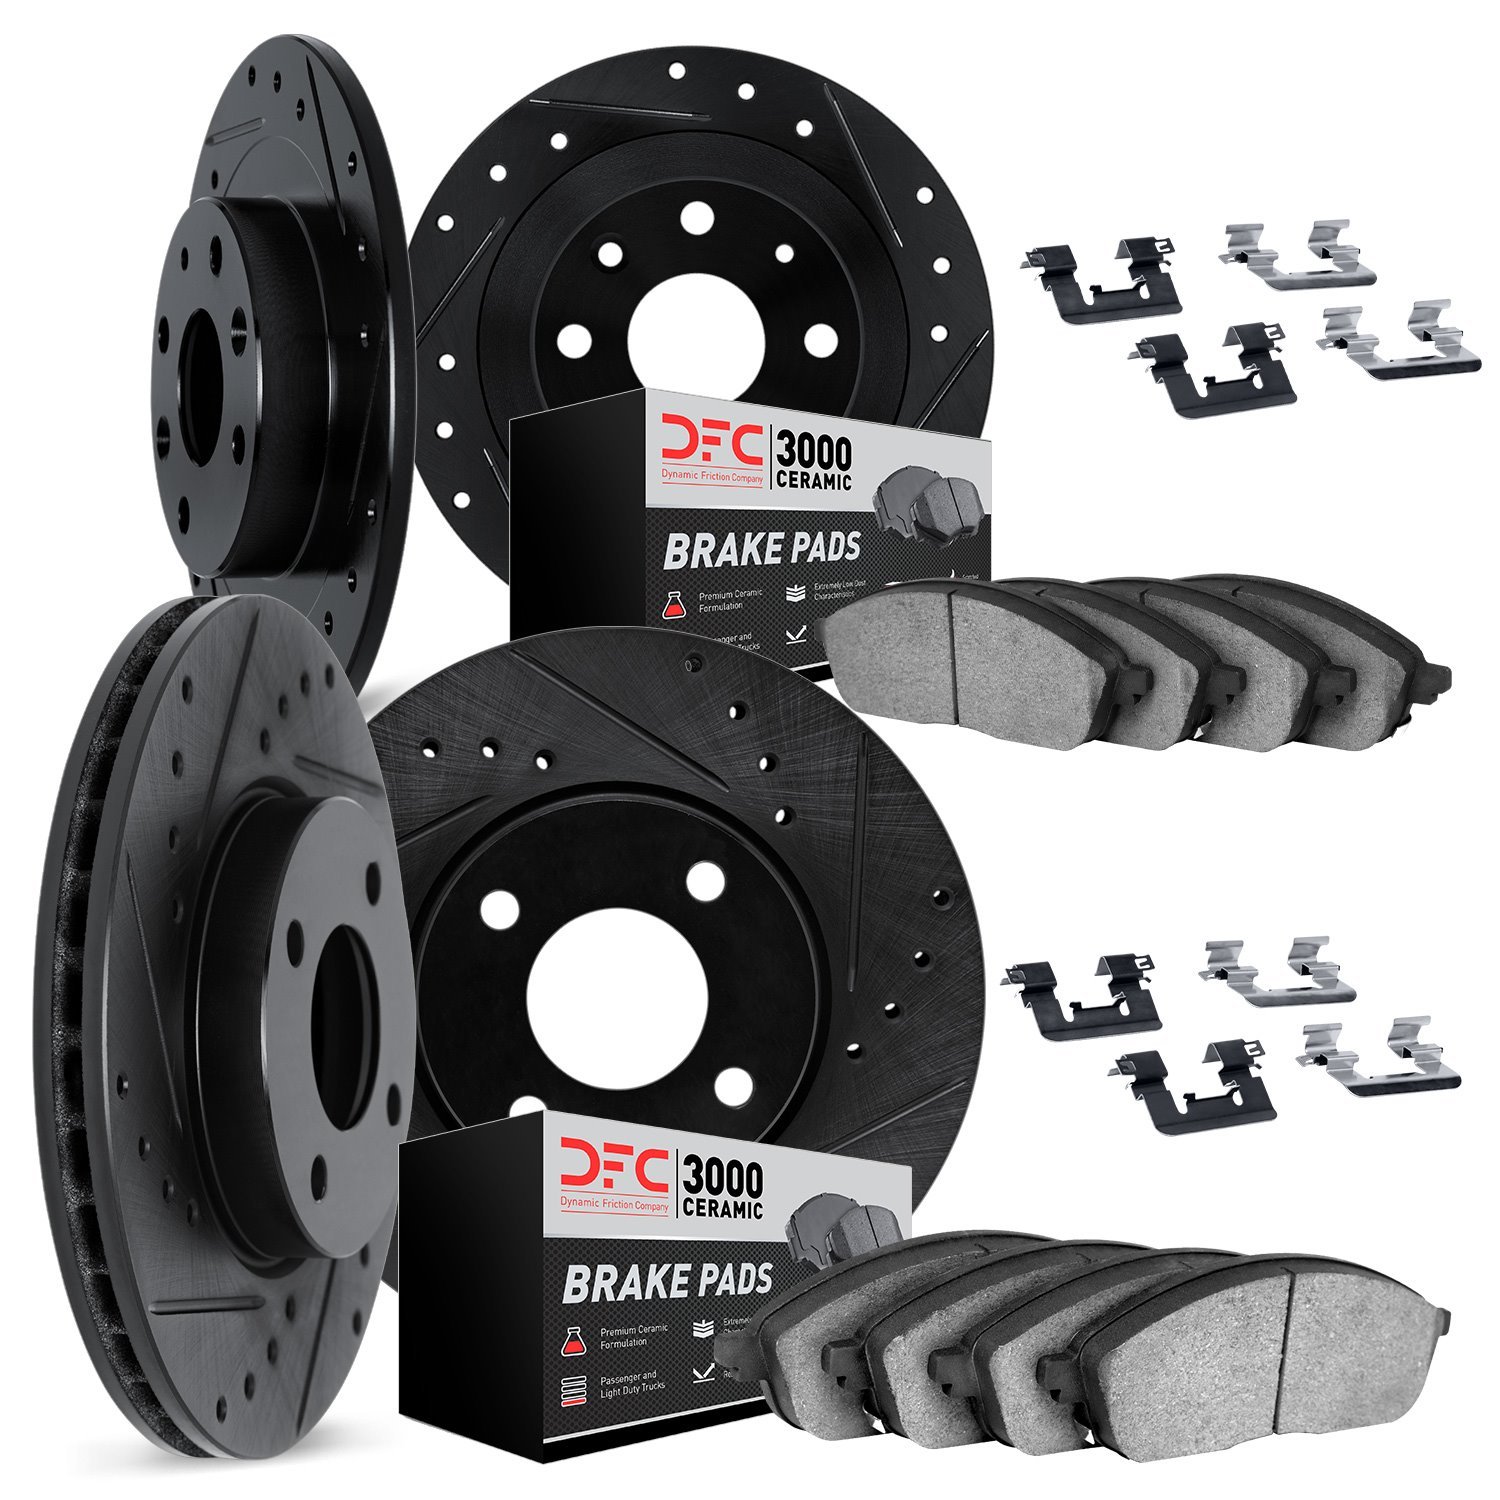 8314-80035 Drilled/Slotted Brake Rotors with 3000-Series Ceramic Brake Pads Kit & Hardware [Black], Fits Select Multiple Makes/M